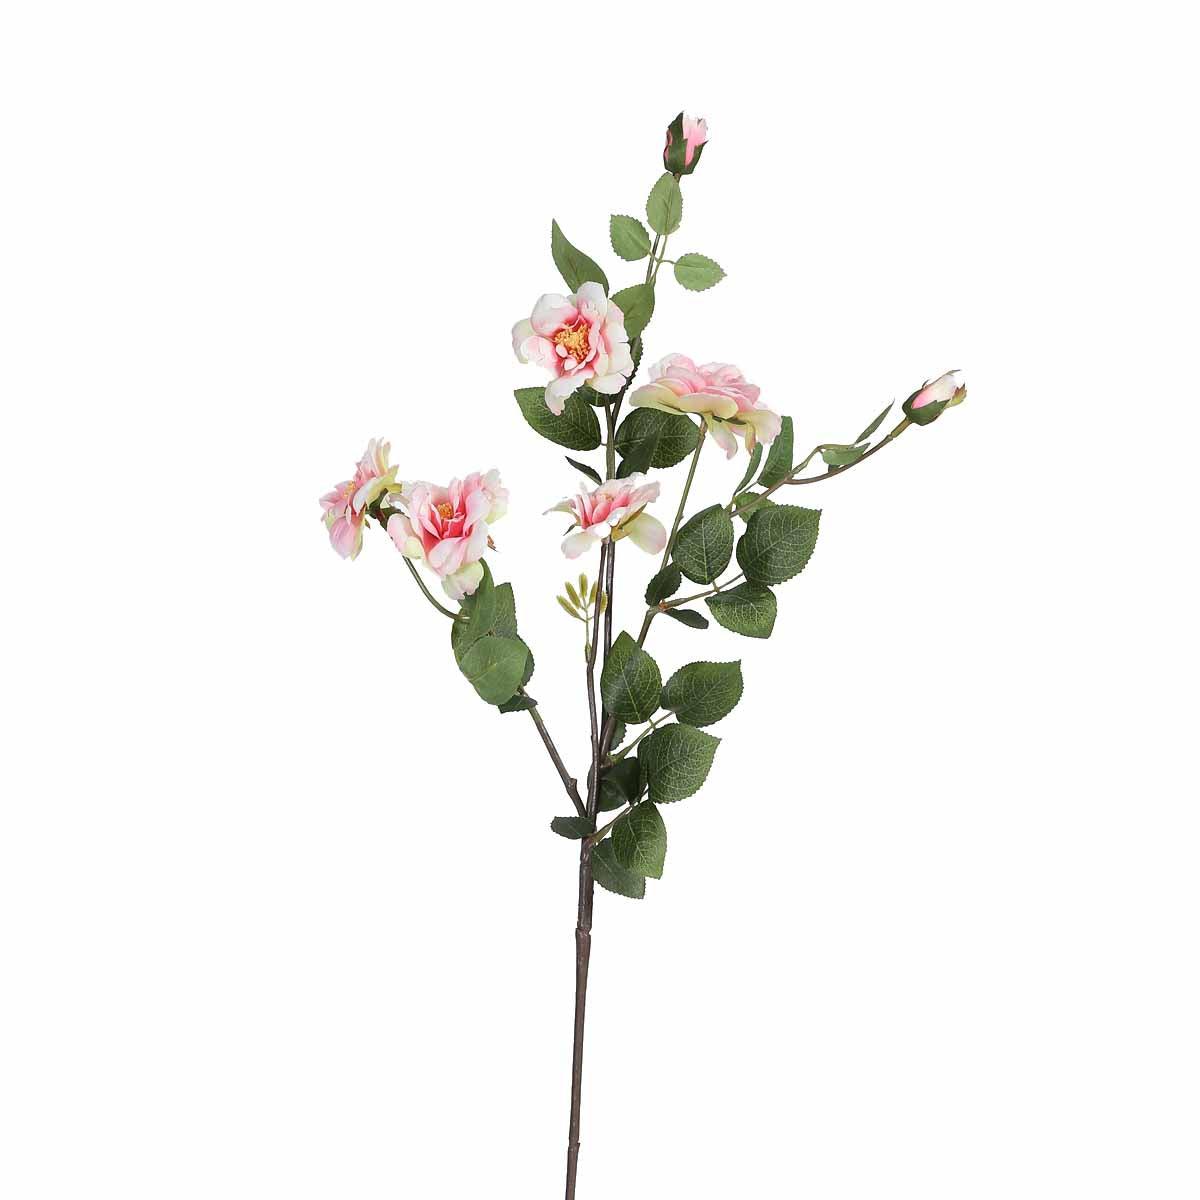 Buy Iceland Rose Flower online in India – Home4u